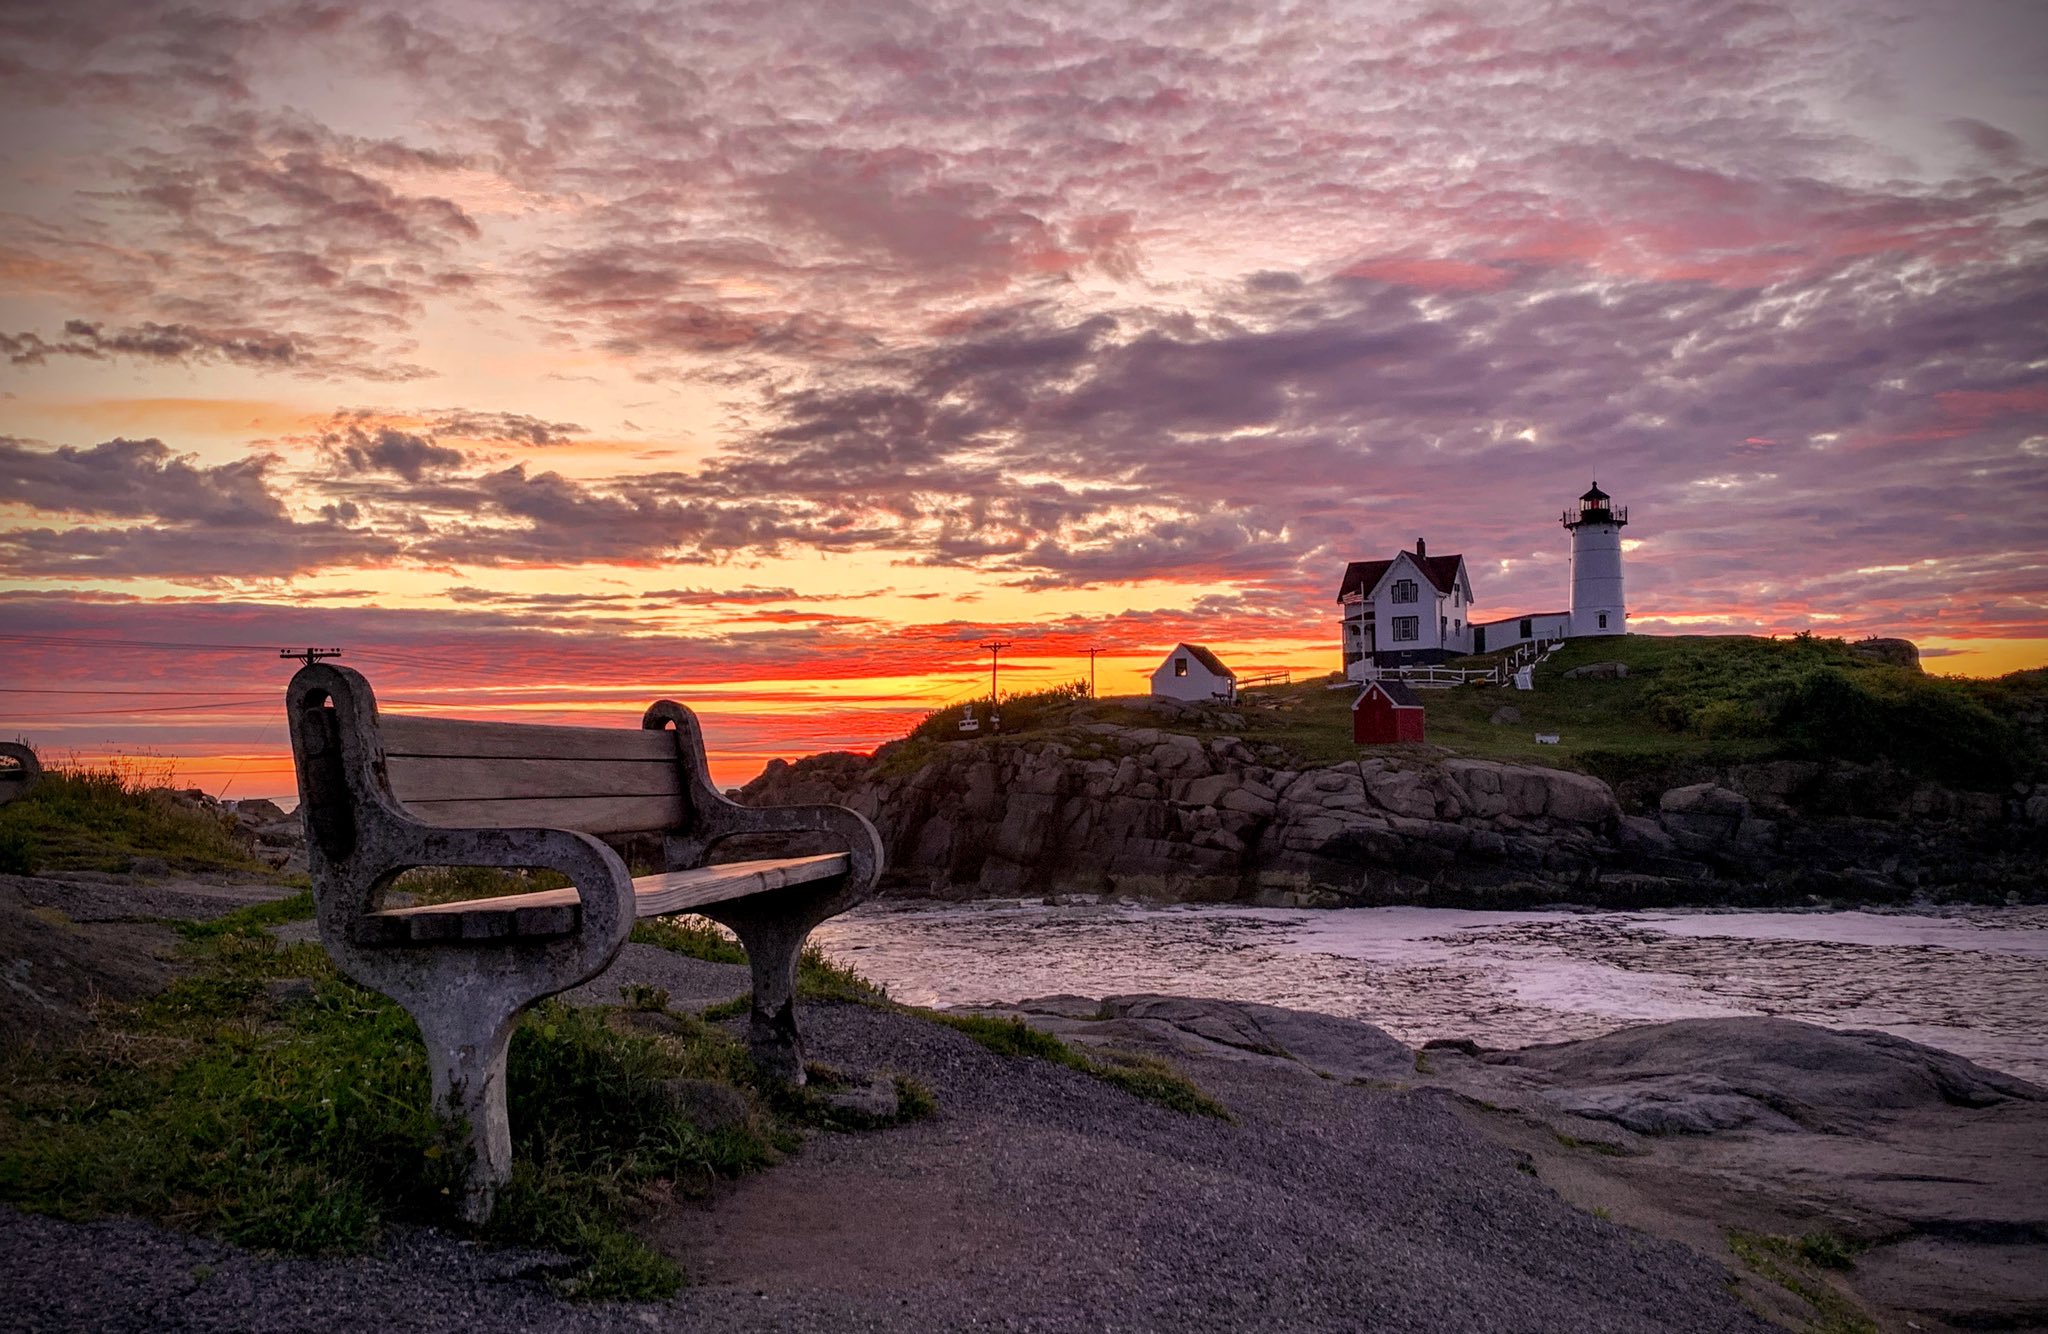 1st Place Summer sunrise at Nubble Lighthouse in Cape Neddick, Maine USA by Stephanie Glennon @SMartinGlennon